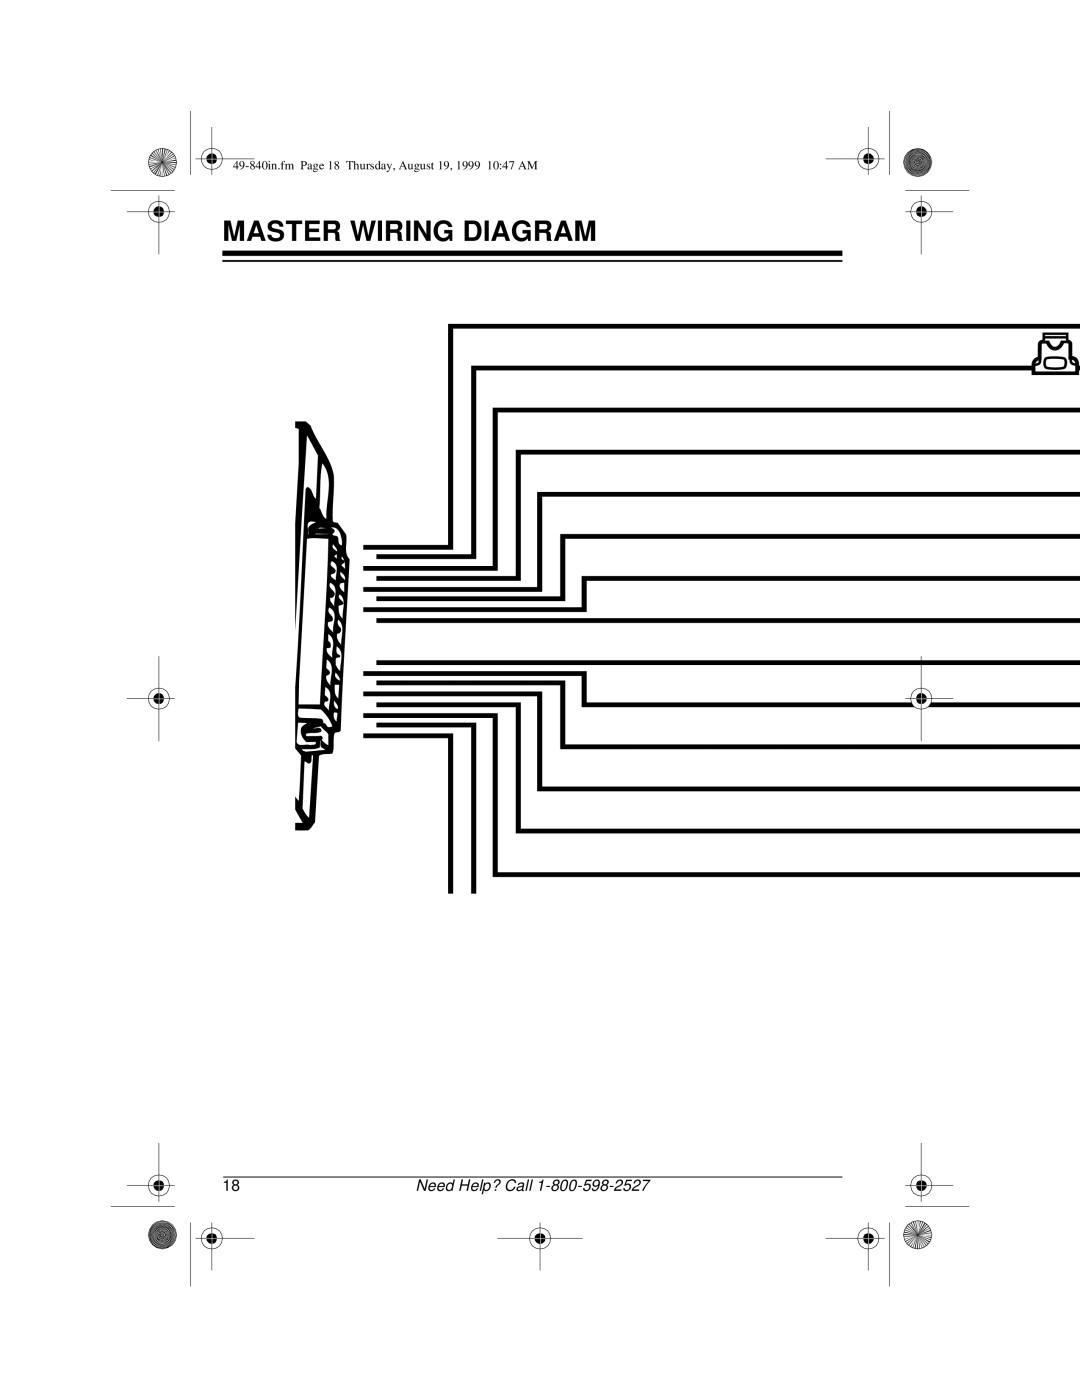 Radio Shack RS-4000 installation manual Master Wiring Diagram, Need Help? Call 